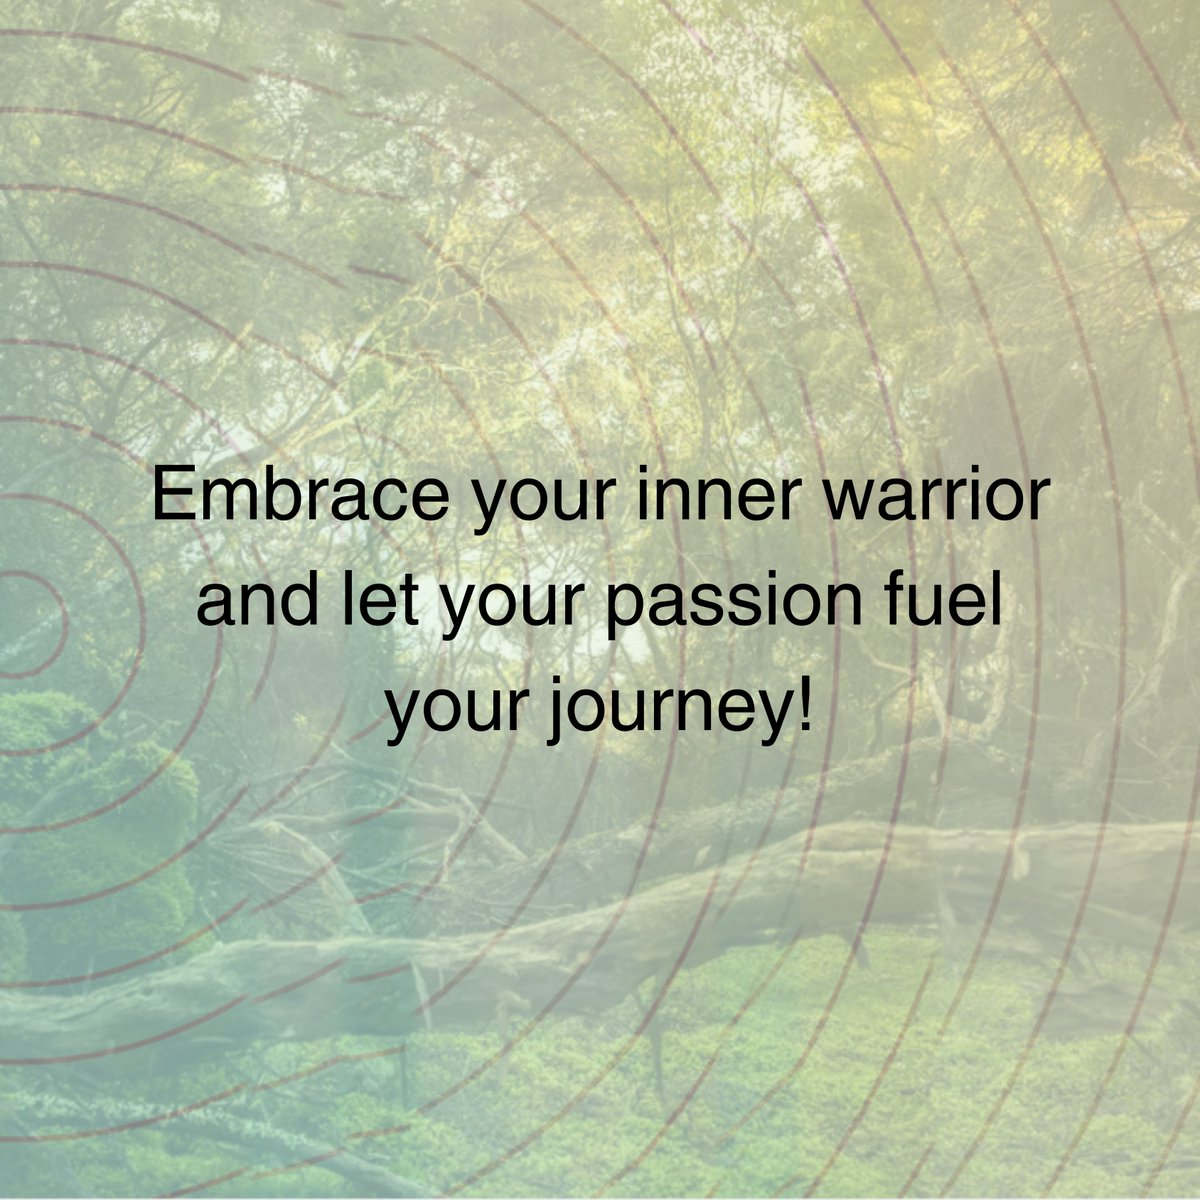 Embrace your inner warrior and let your passion fuel your journey!

#AjooniRetreat #Wolverhampton #Meditation #SpiritualRetreat #Positivity #Motivation #PositiveQuote